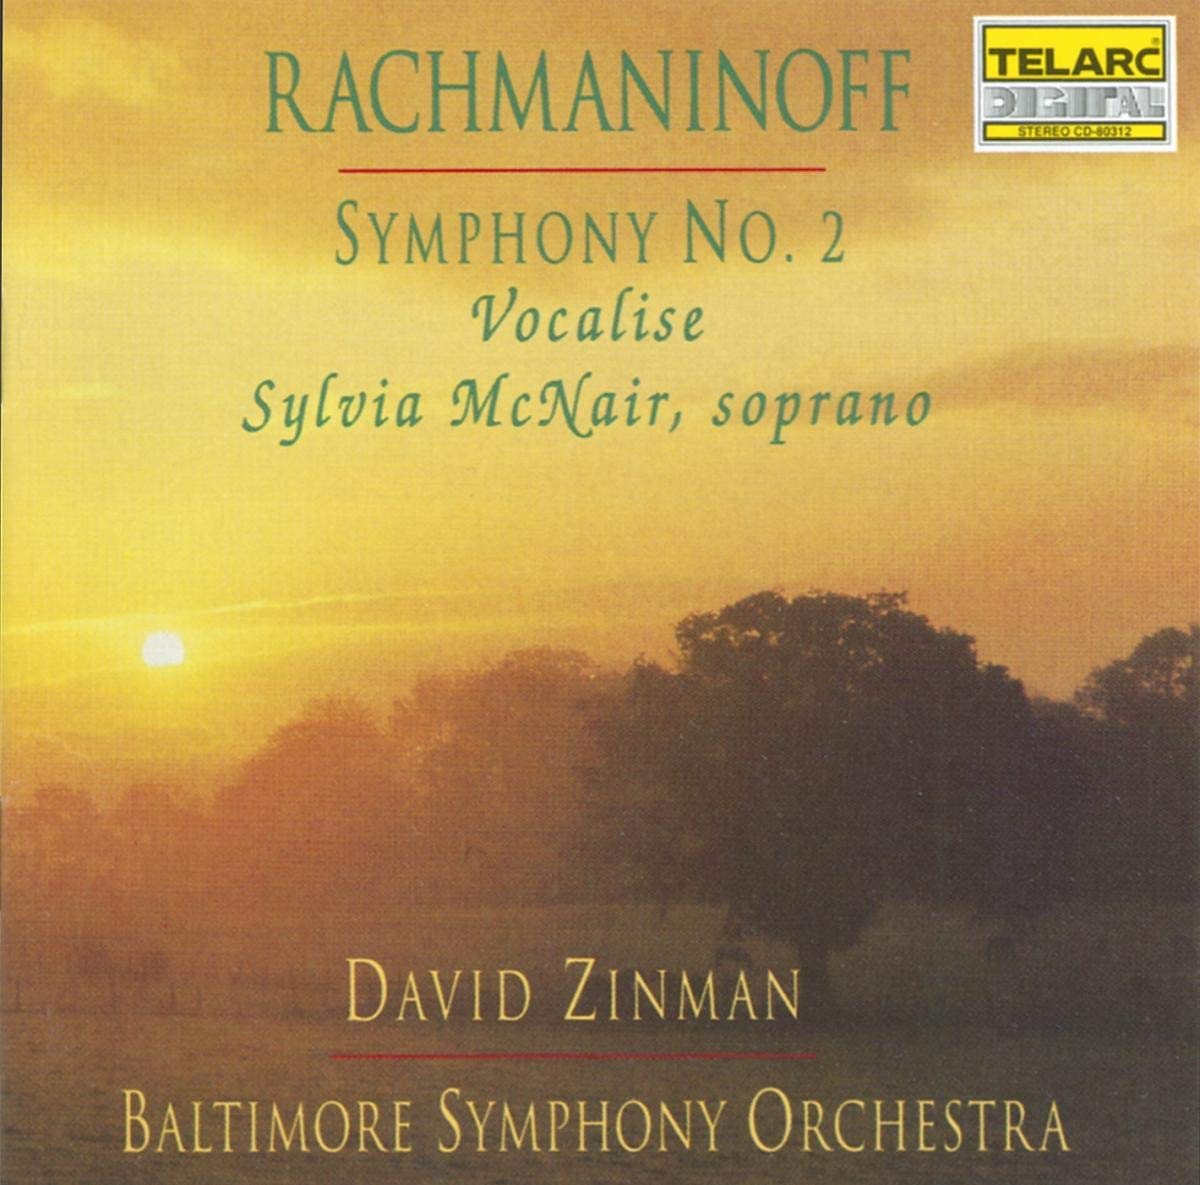 RACHMANINOV: SYMPHONY NO. 2; VOCALISE - McNair, Zinman, Baltimore Symphony